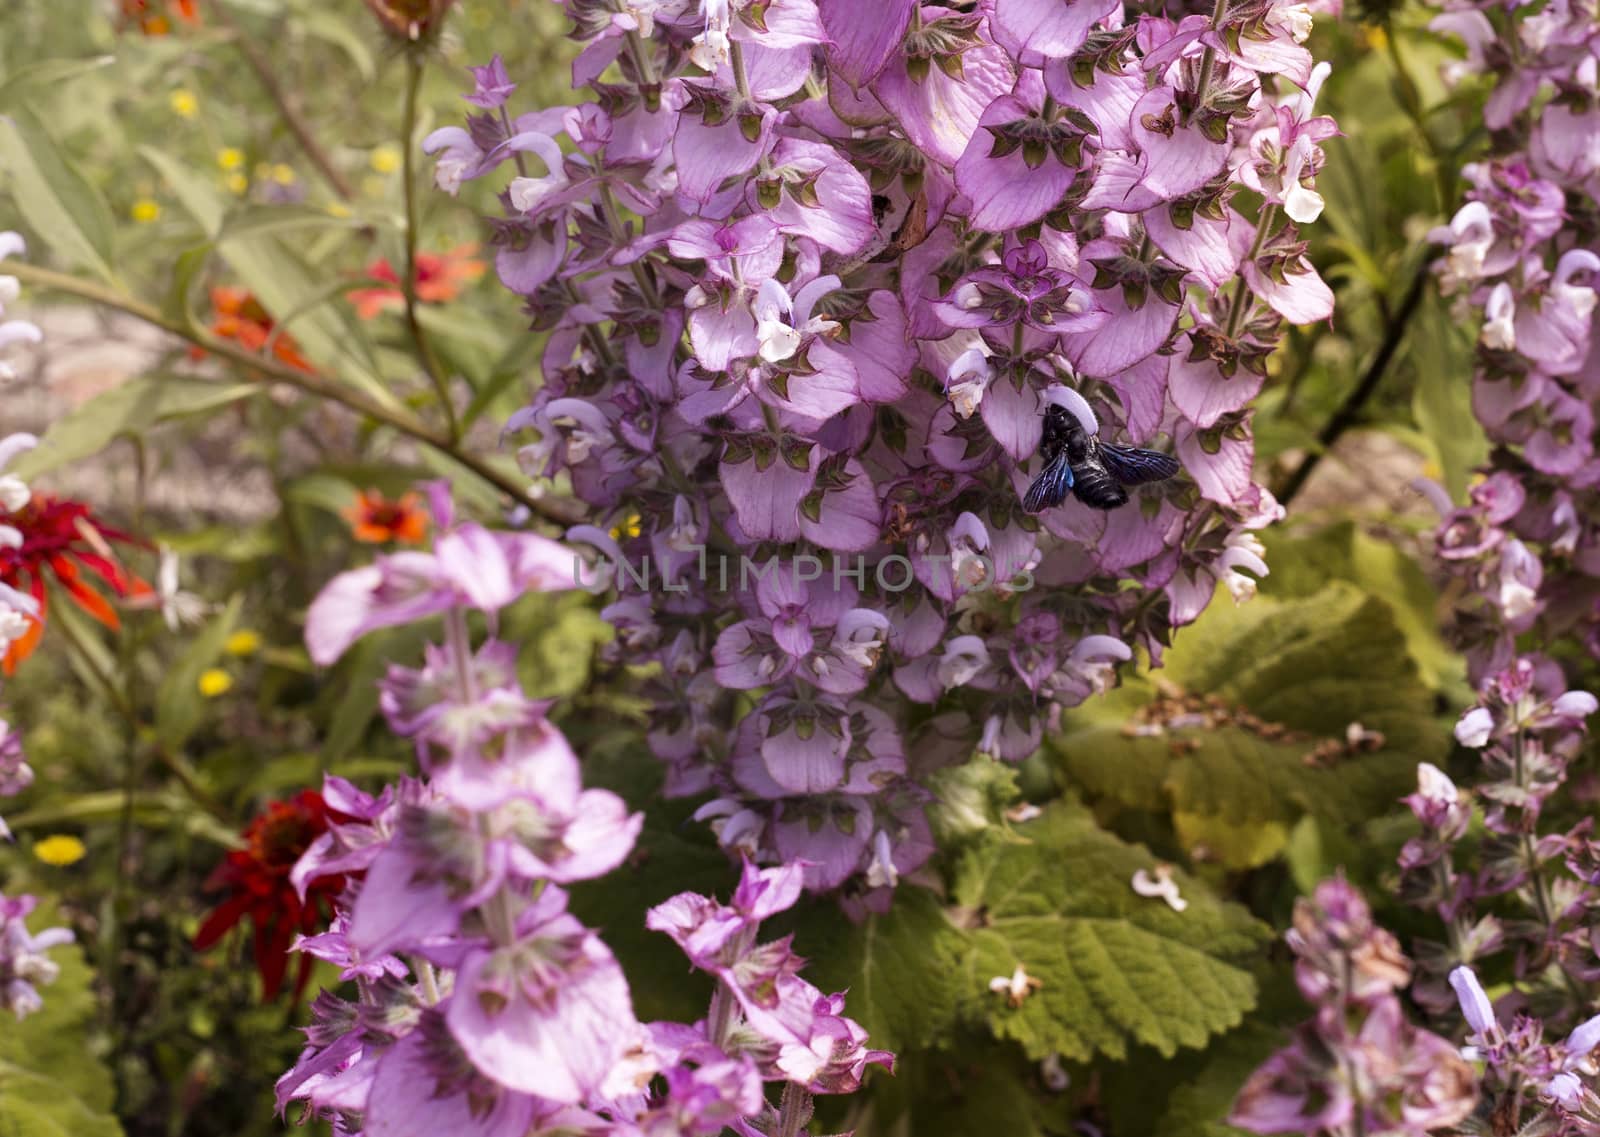 Blue Carpenter bee by photosampler